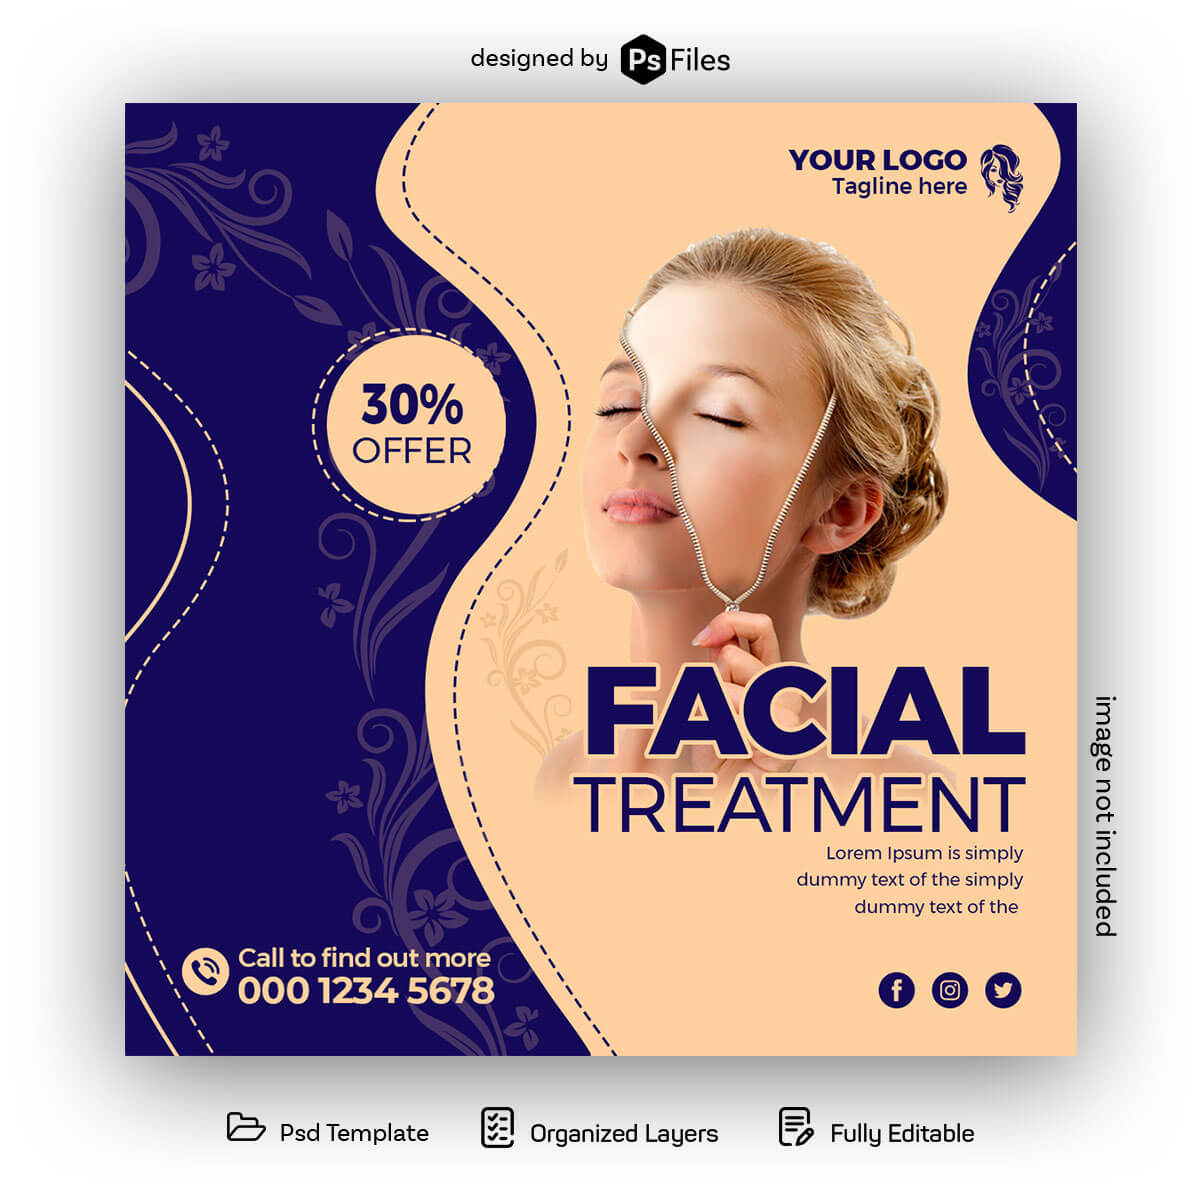 PsFiles_Free Facial Treatment PSD